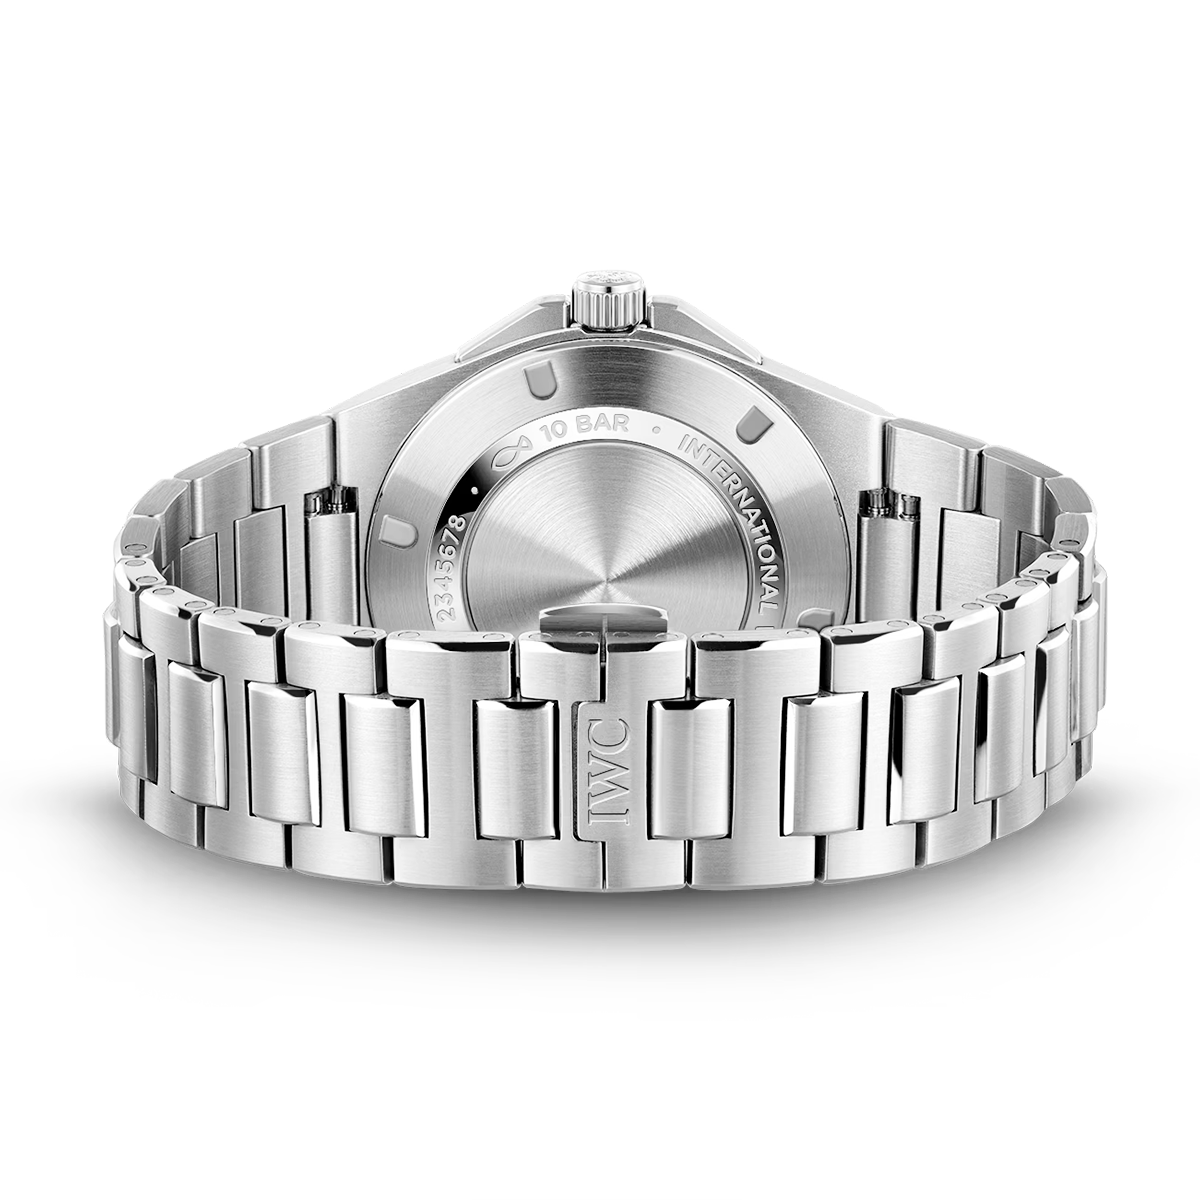 Ingenieur Automatic 40mm Silver Dial Bracelet Watch